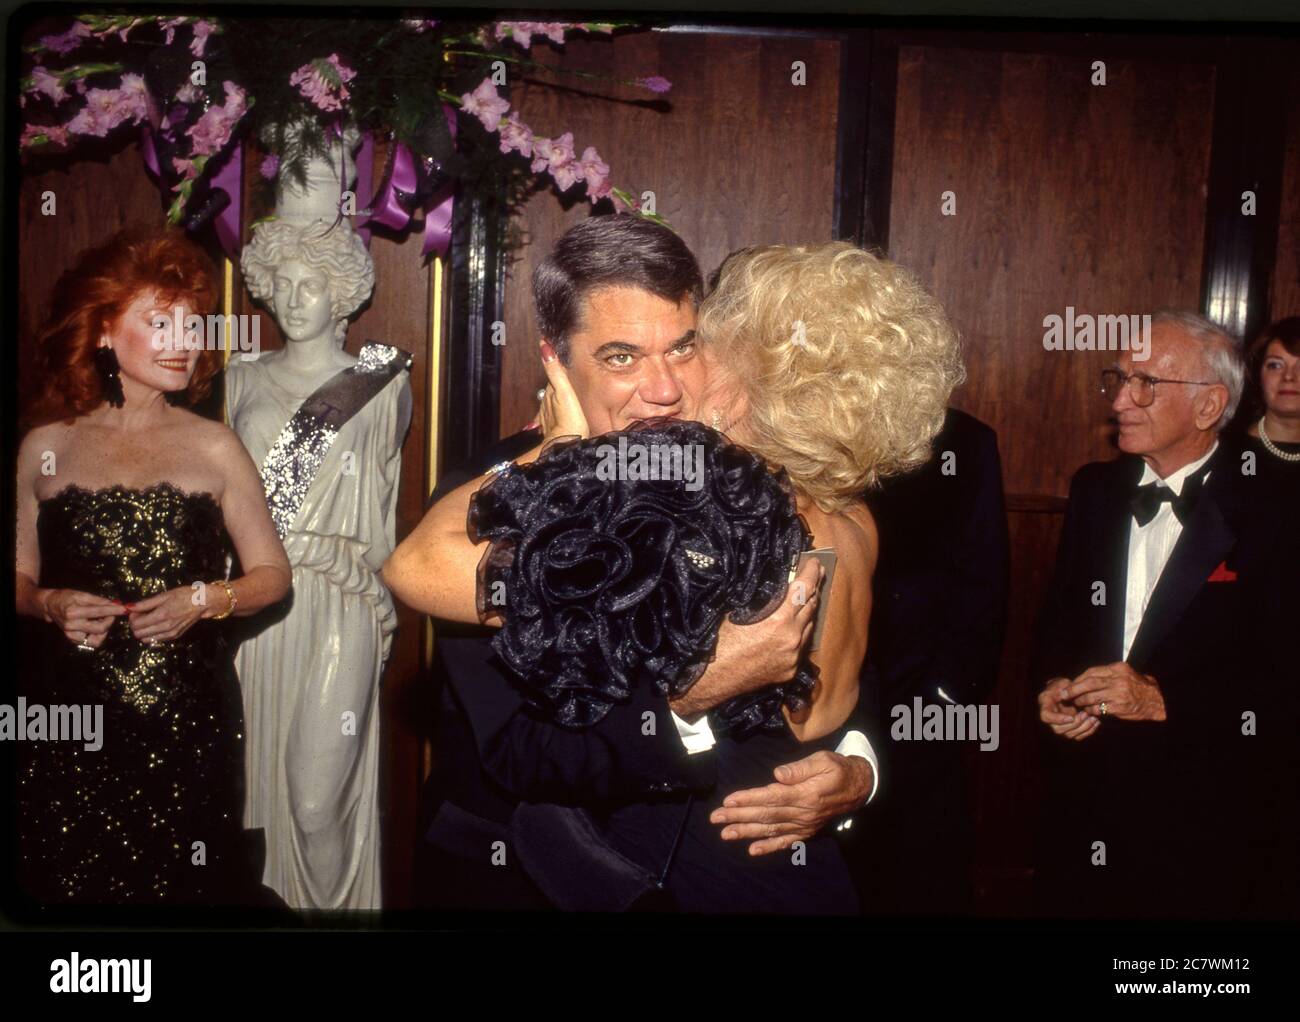 El crítico de cine Rex Reed recibe un abrazo de Ruta Lee en Gala en Beverly Hills, CA Foto de stock